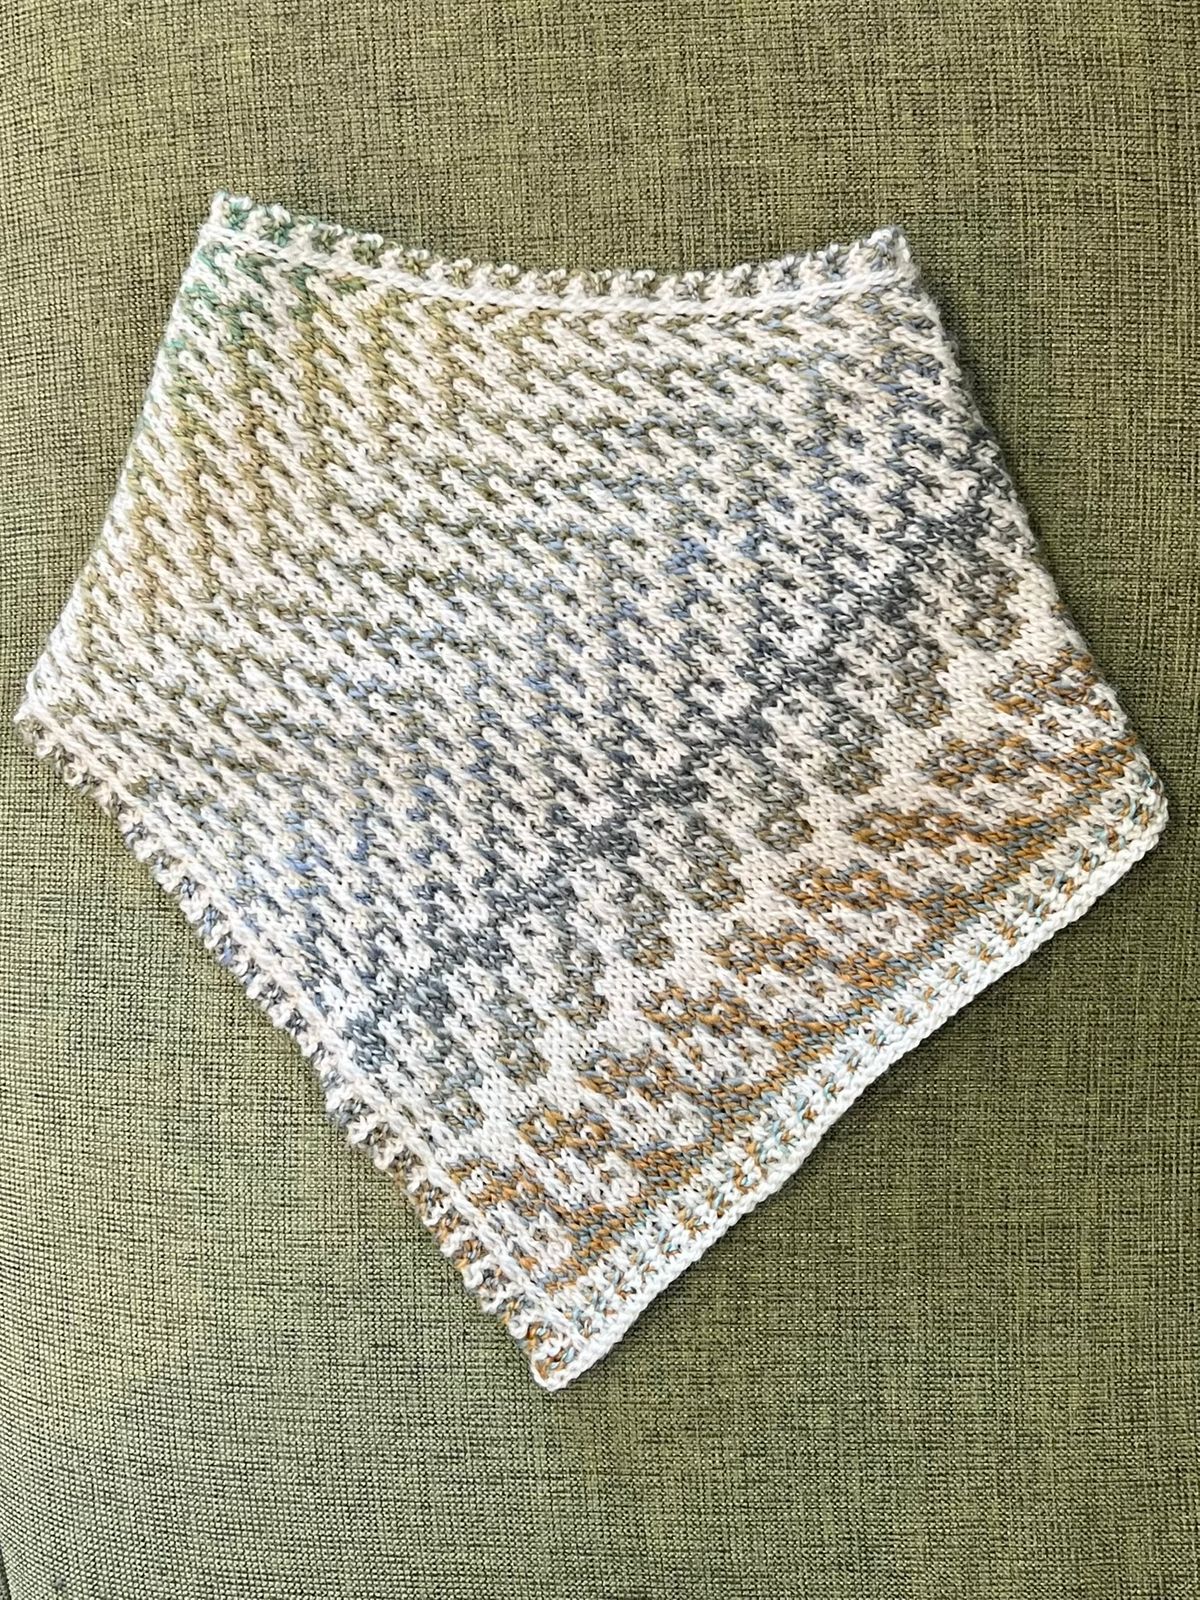 Dovetail Cowl - Mosaic Knitting